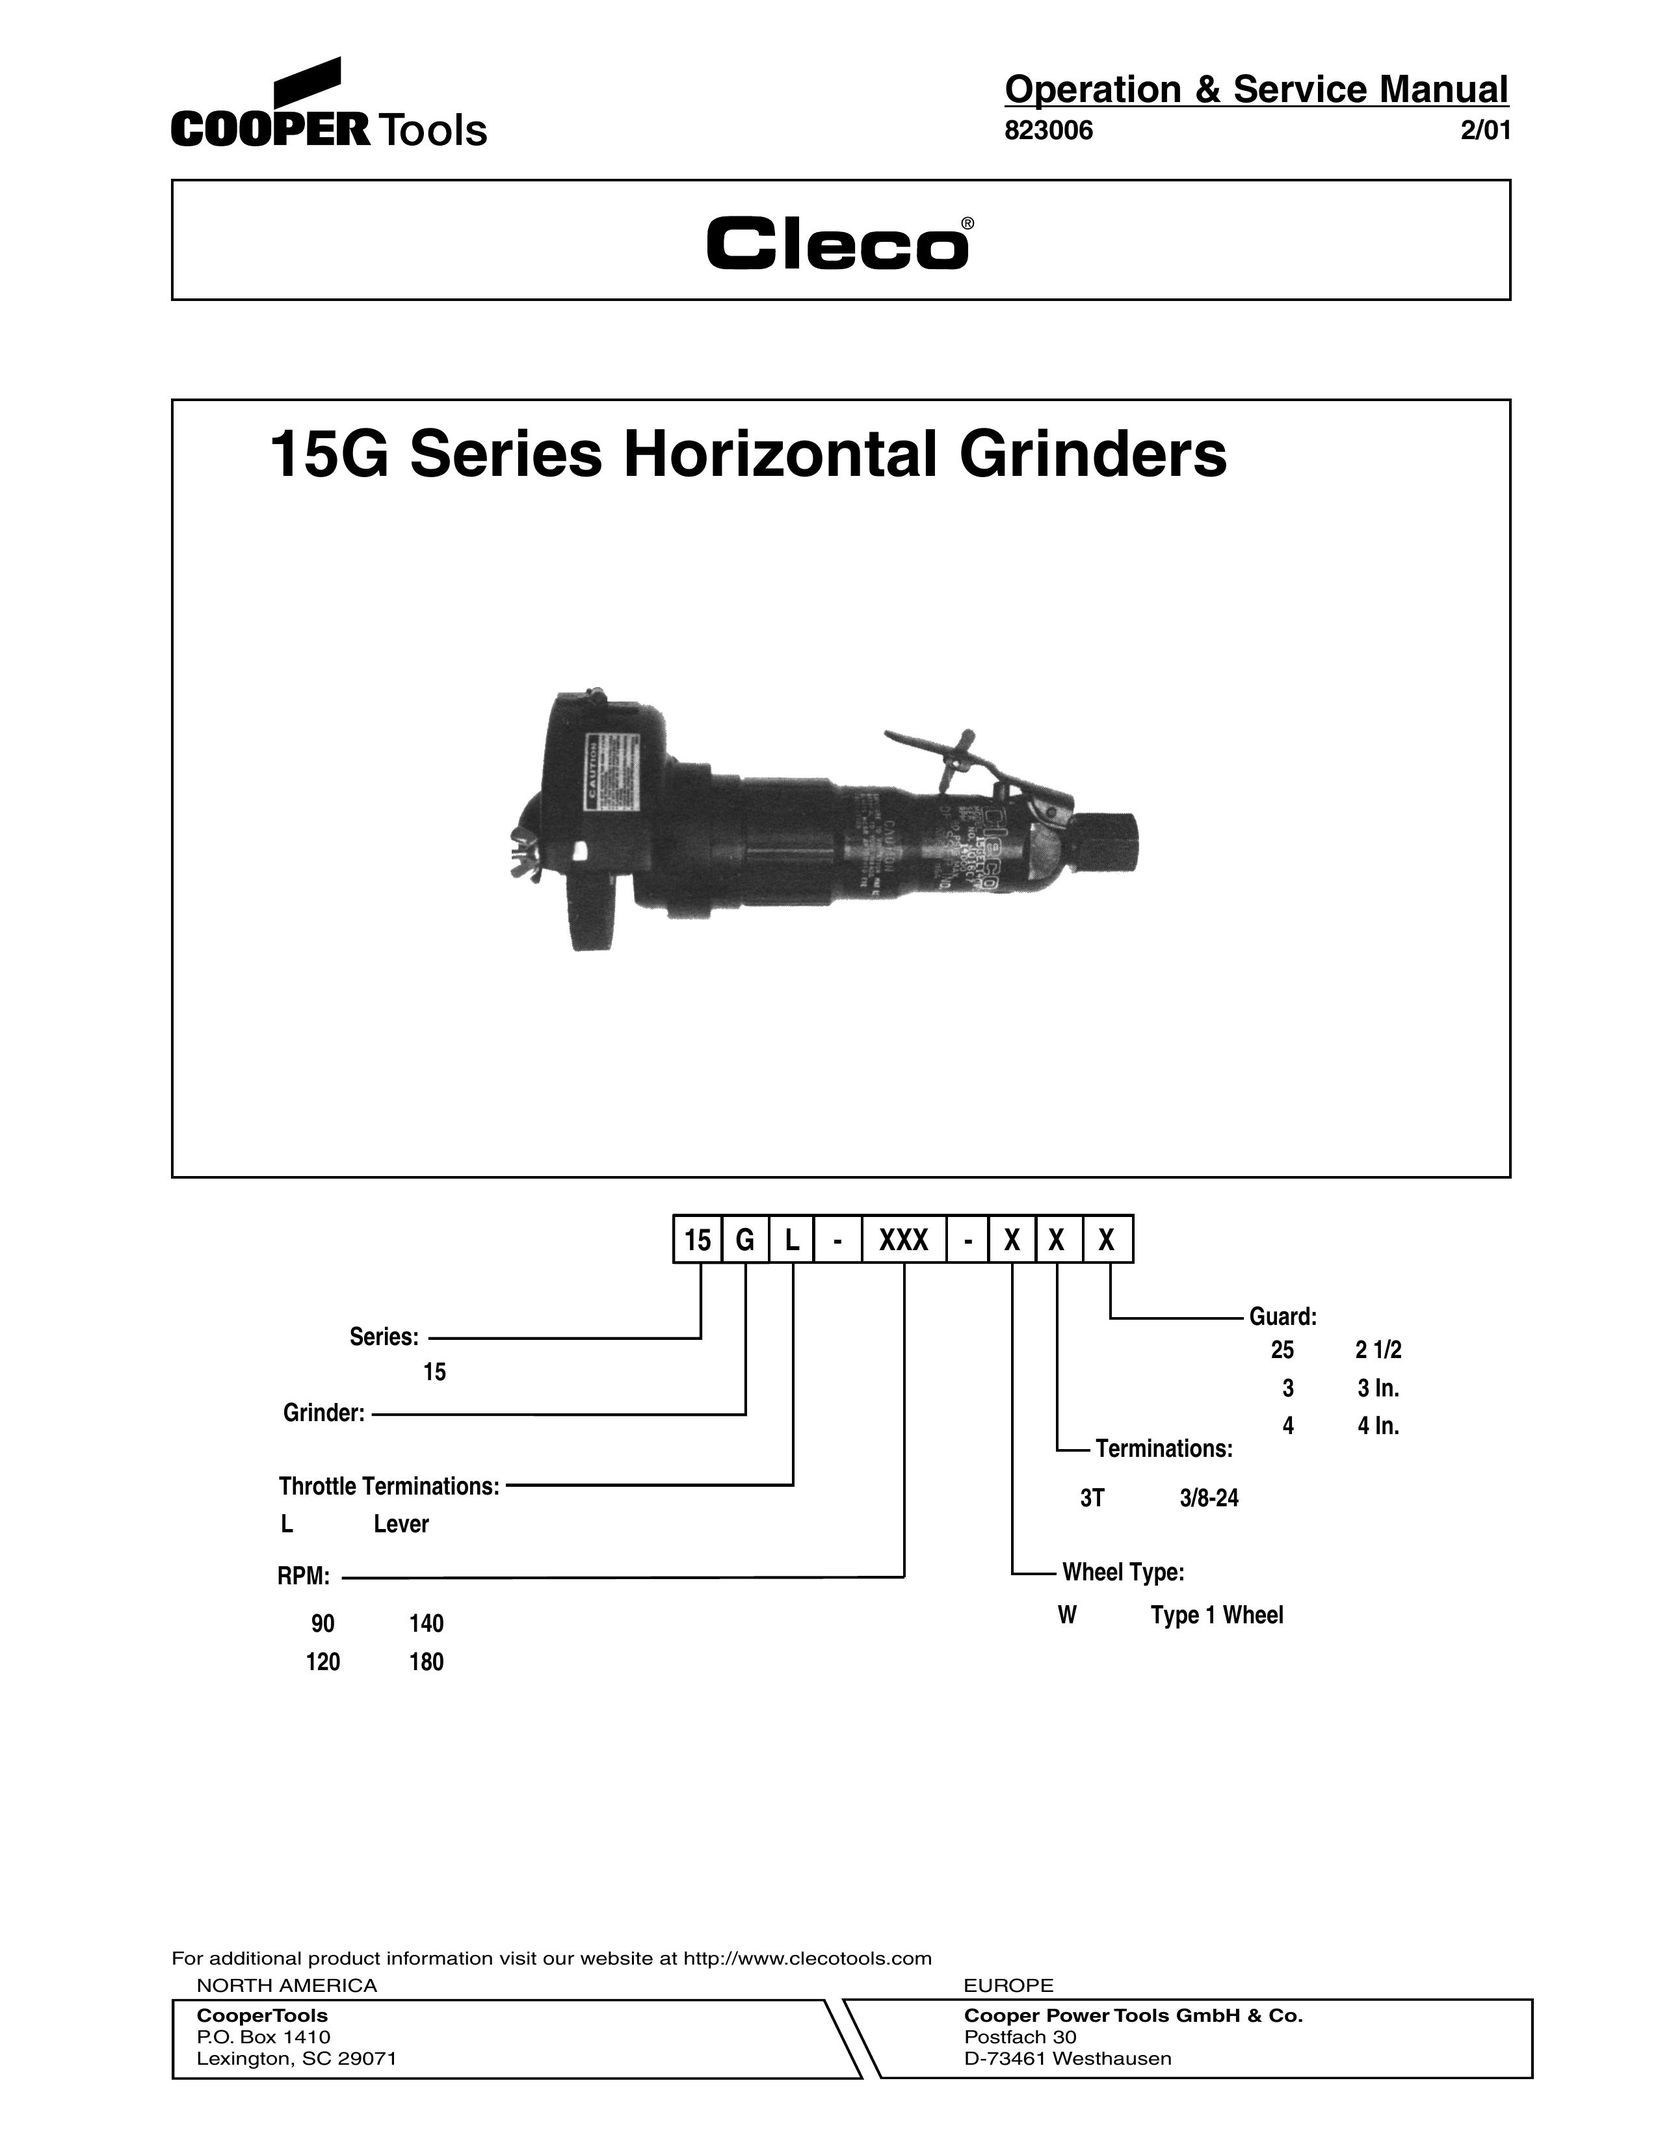 Cooper Bussmann 15G Series Grinder User Manual